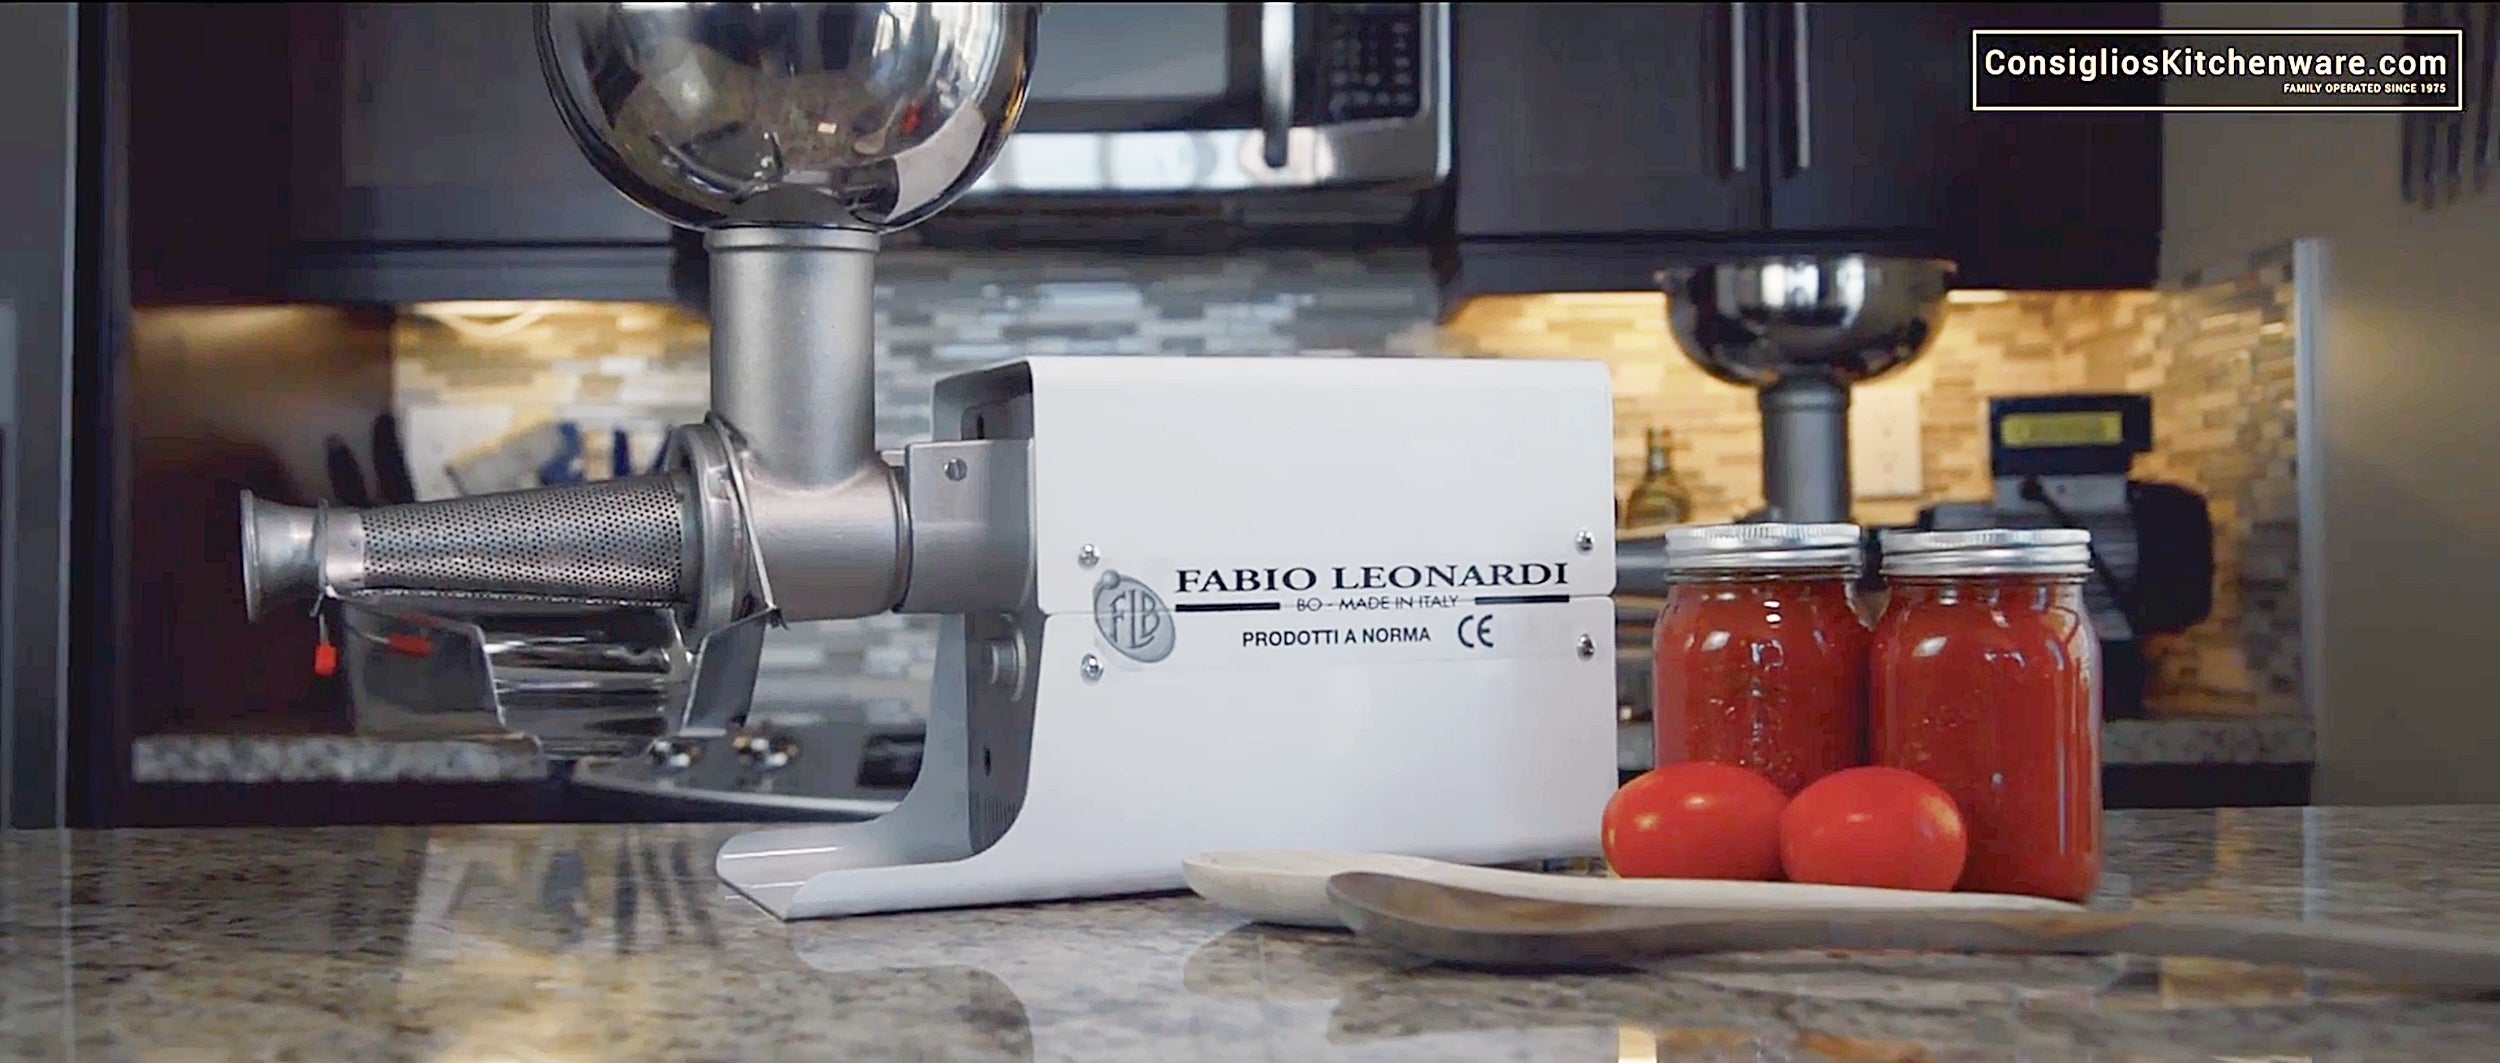 Fabio Leonardi Tomato Milling Machine Buying Guide